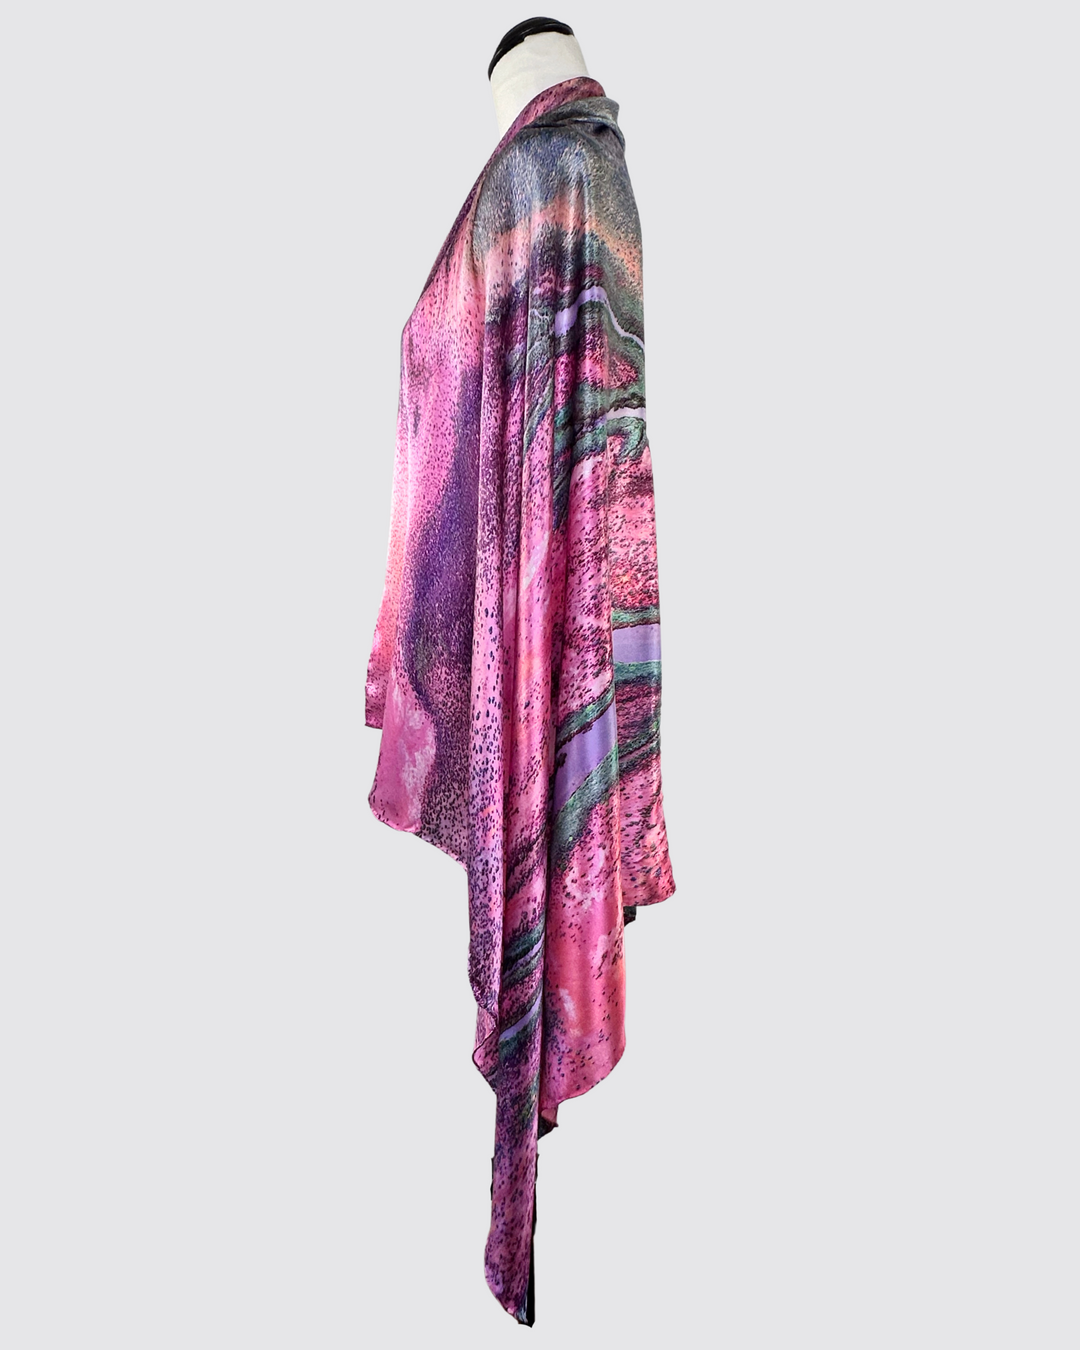 Port Hedland (estuary) scarf